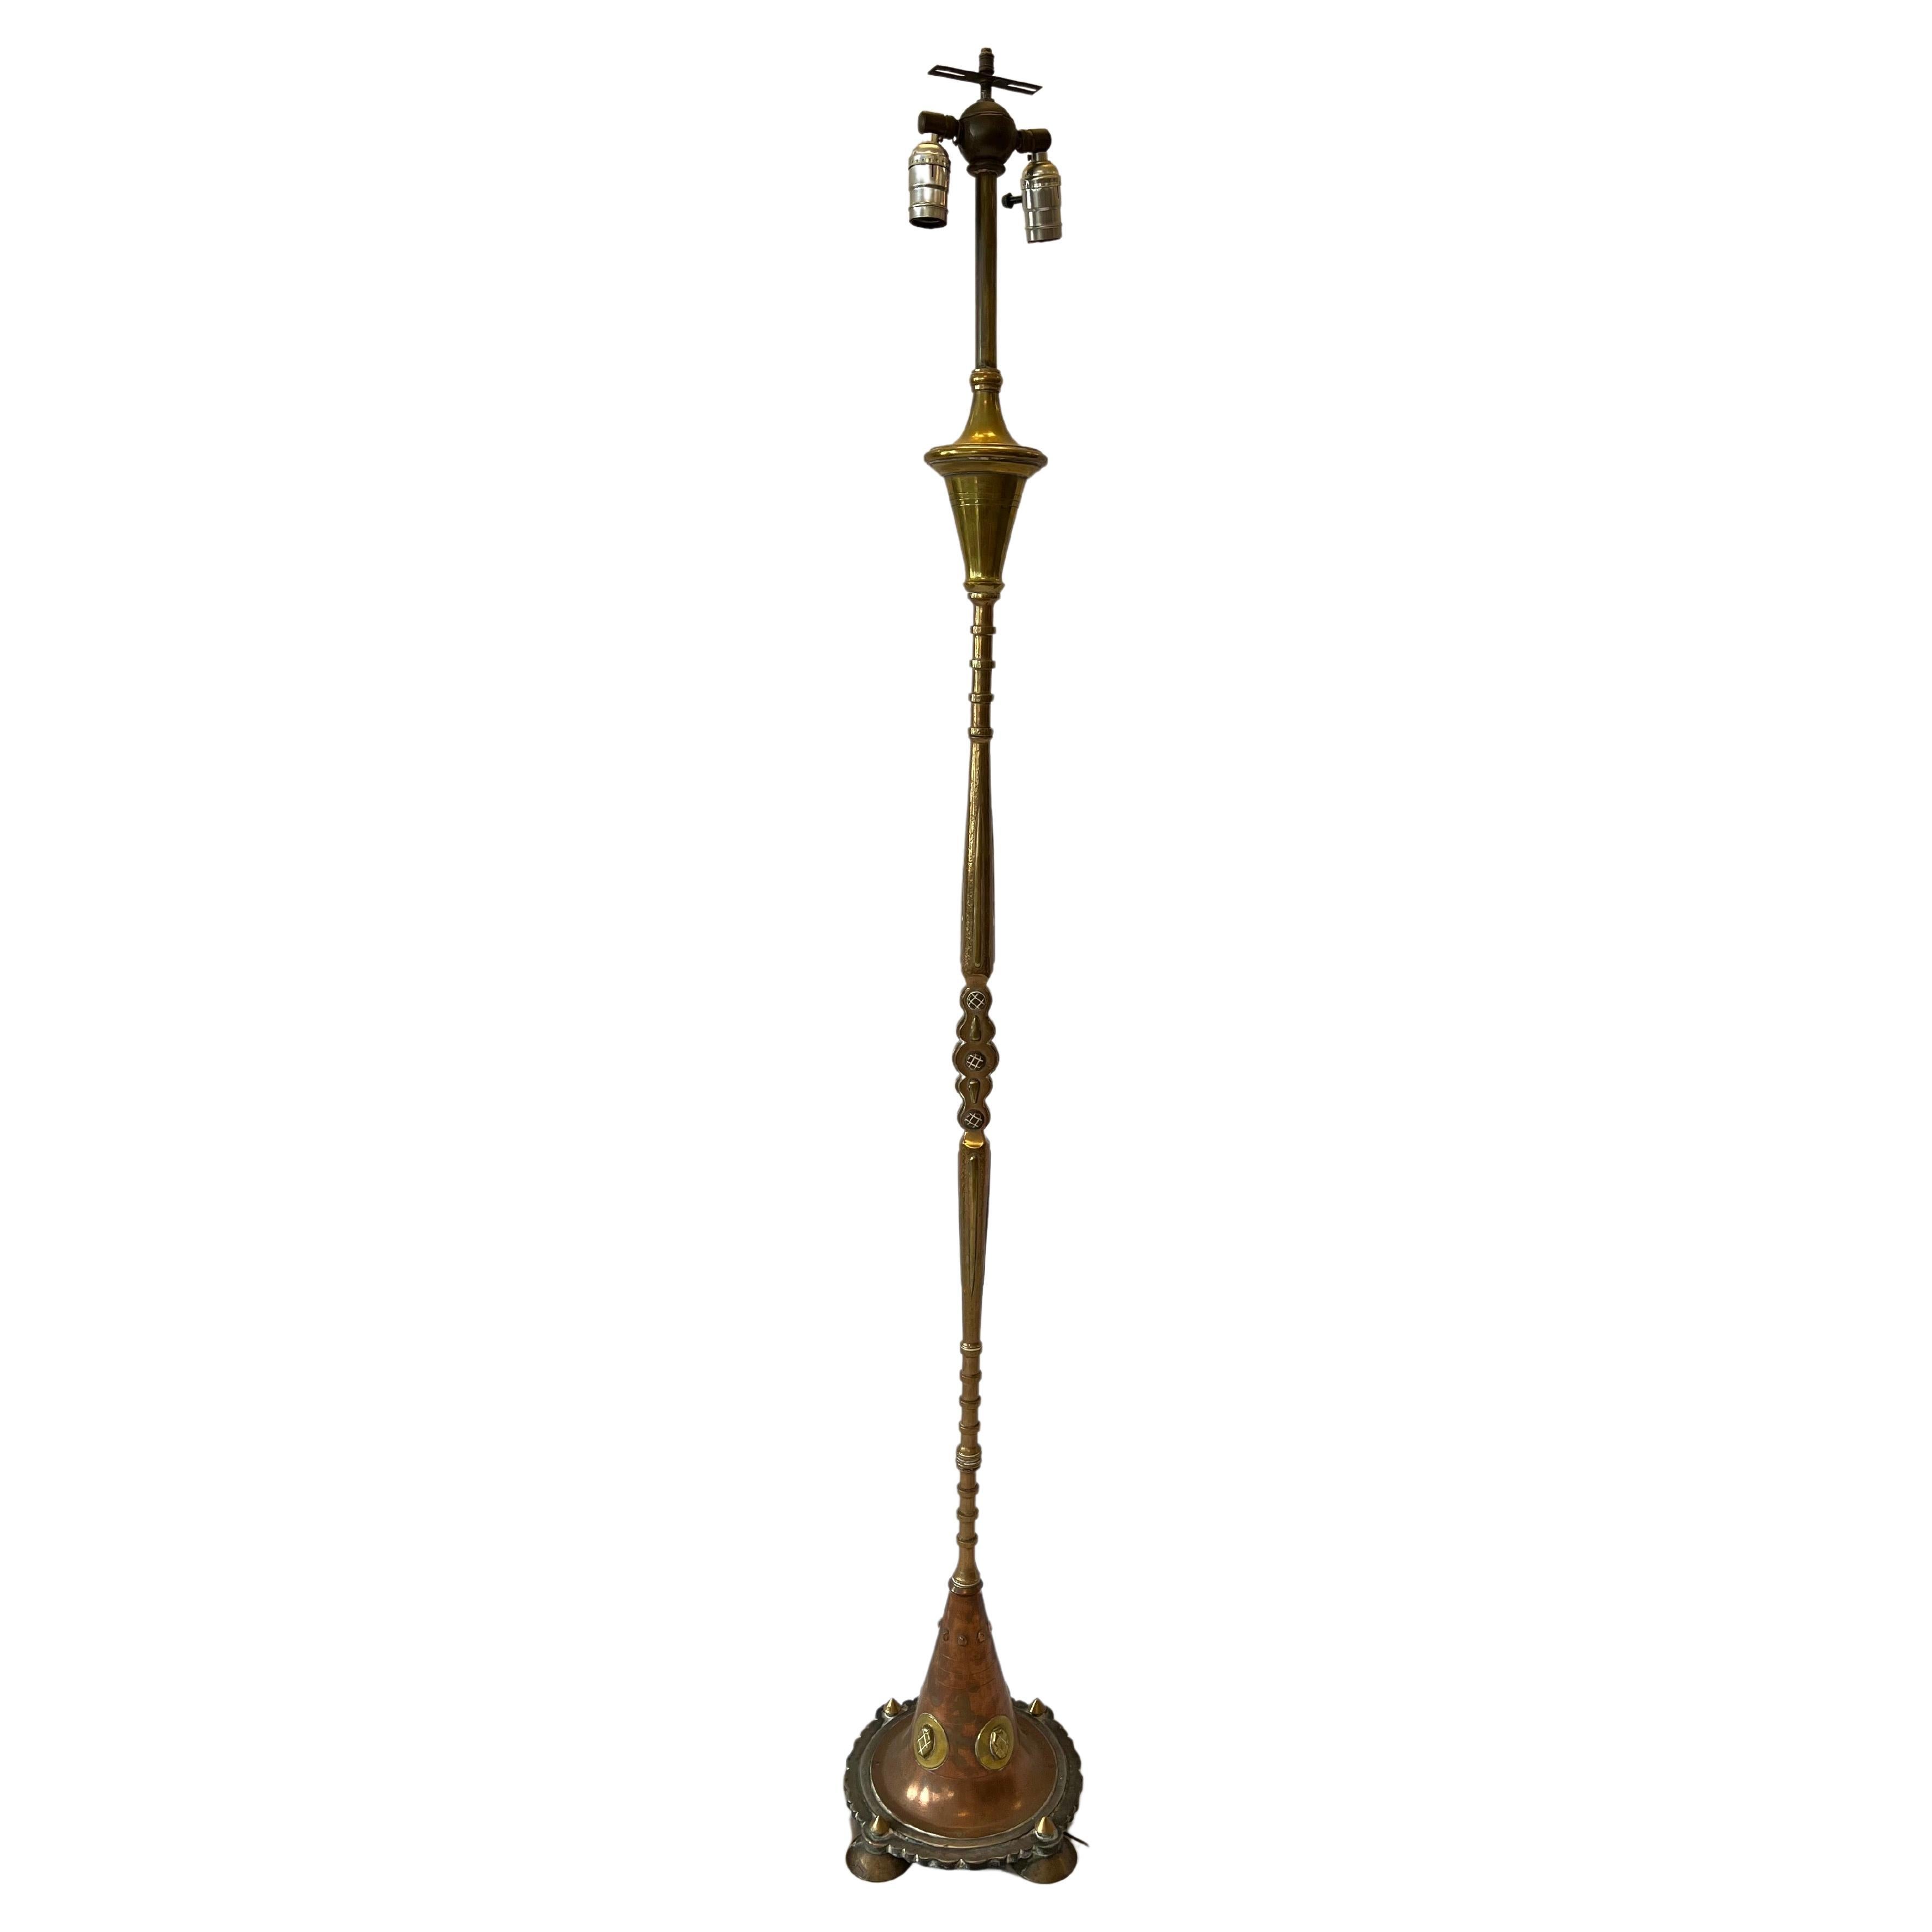 Antique Copper Brass Mixed Metal Ornate Moorish Style Hand Crafted Floor Lamp (lampe de sol de style mauresque) en vente